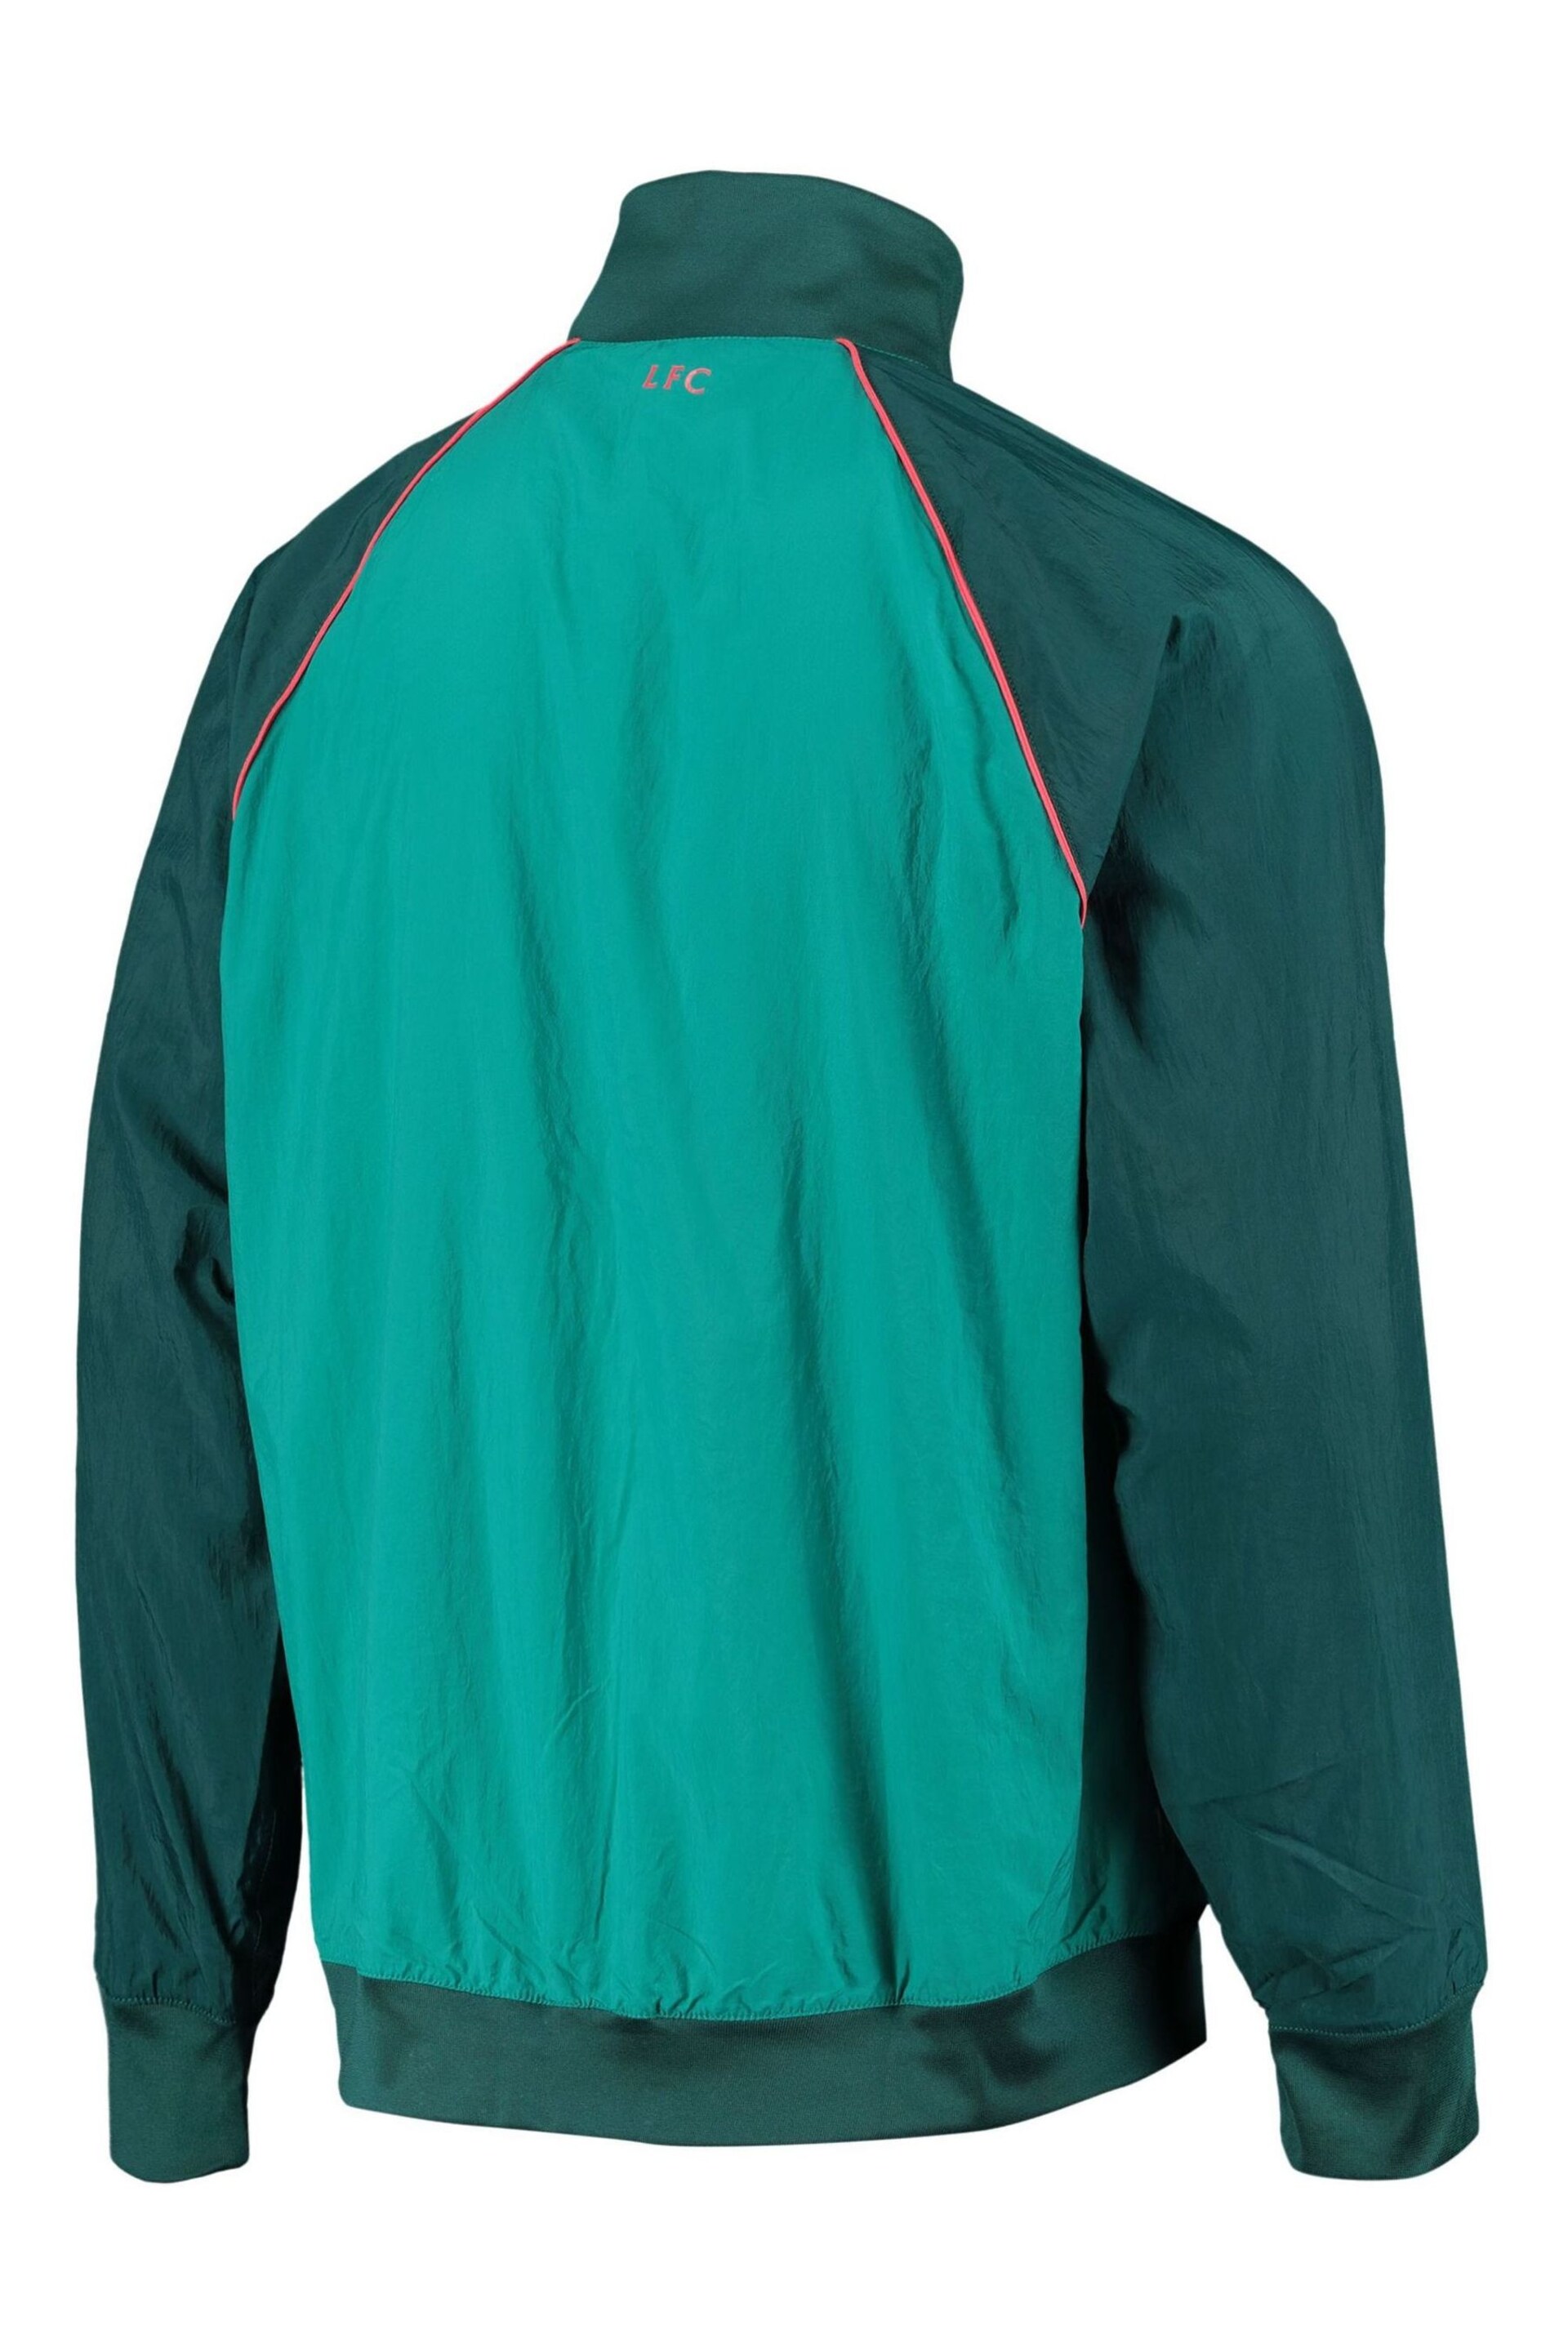 Nike Green Liverpool Tracksuit Jacket - Image 3 of 3